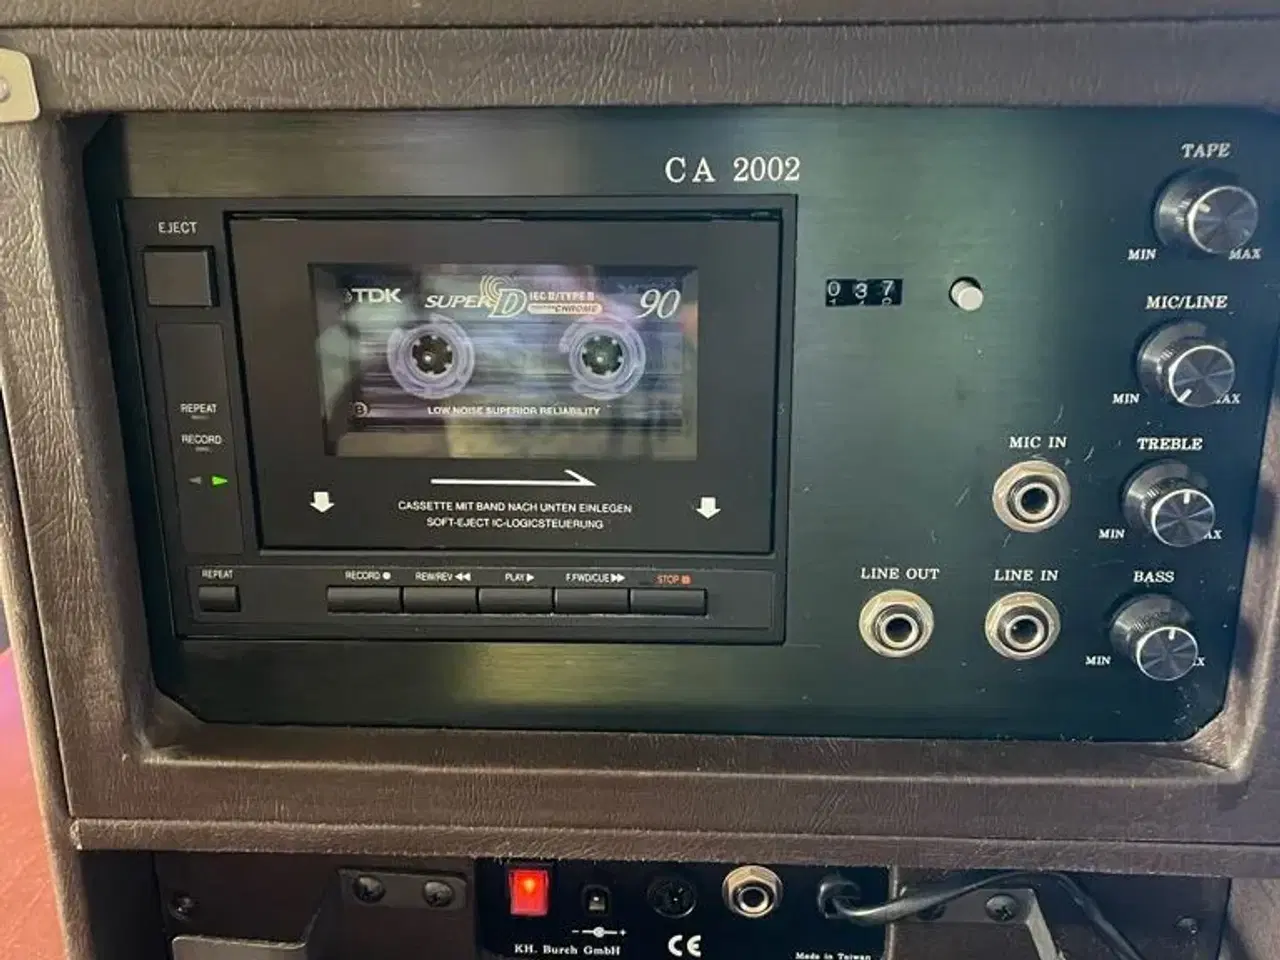 Billede 4 - Mobil kassettbåndoptager CA-2002